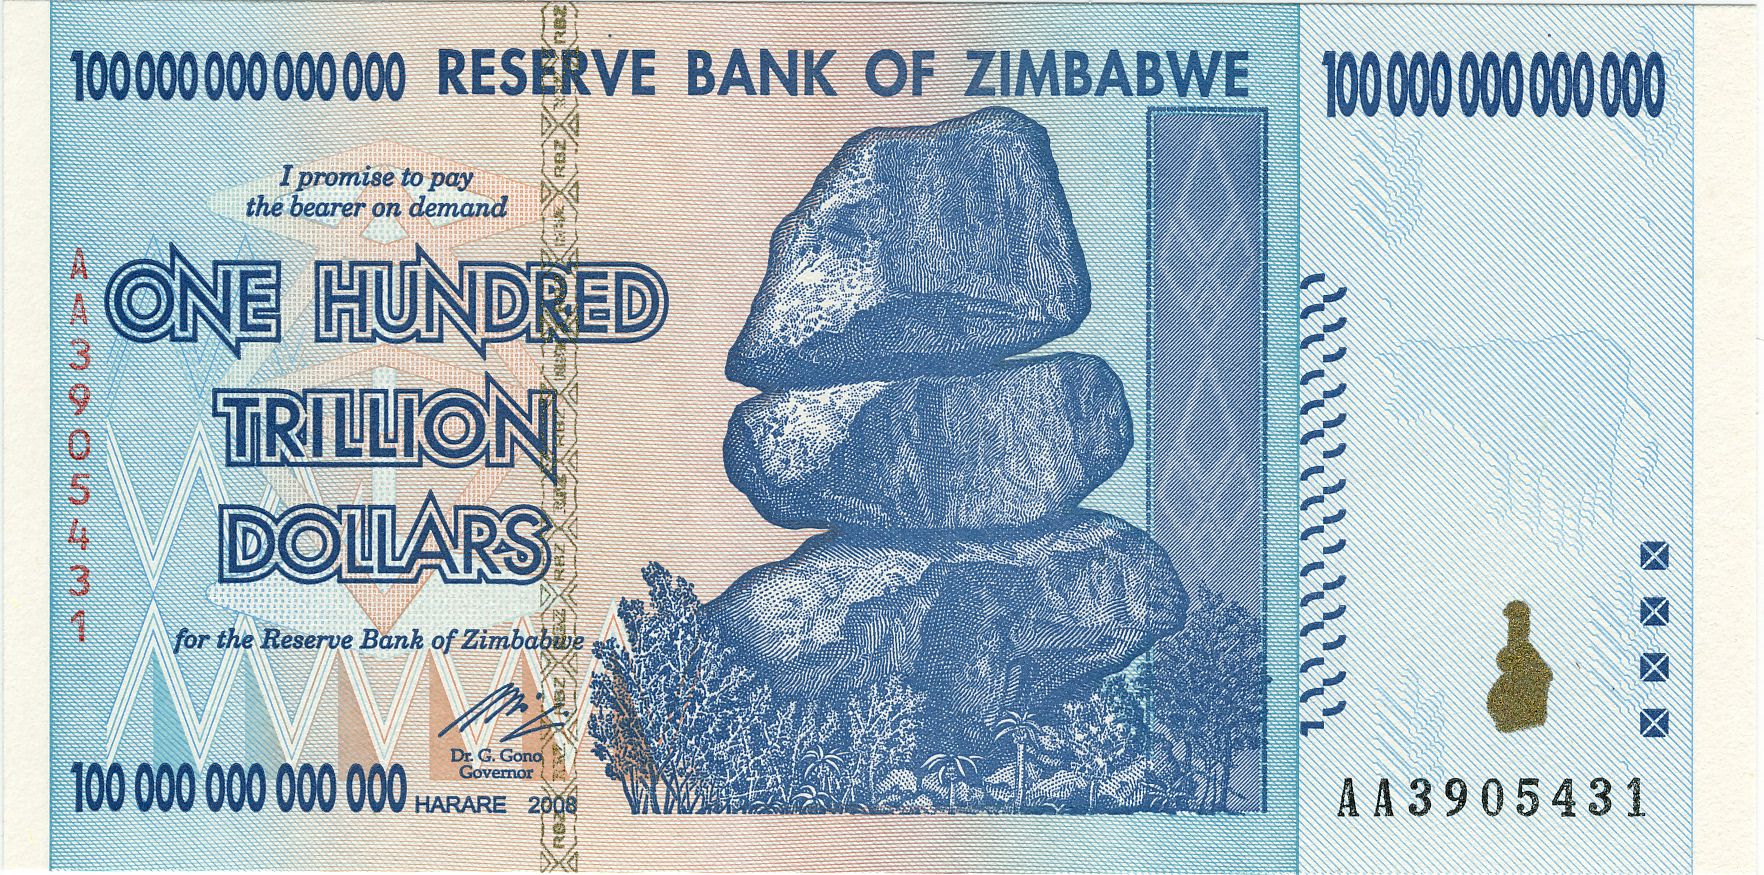 20 50 100 1 x ZIMBABWE 10 TRILLION DOLLAR AA Circulated Used 2008 CURRENCY